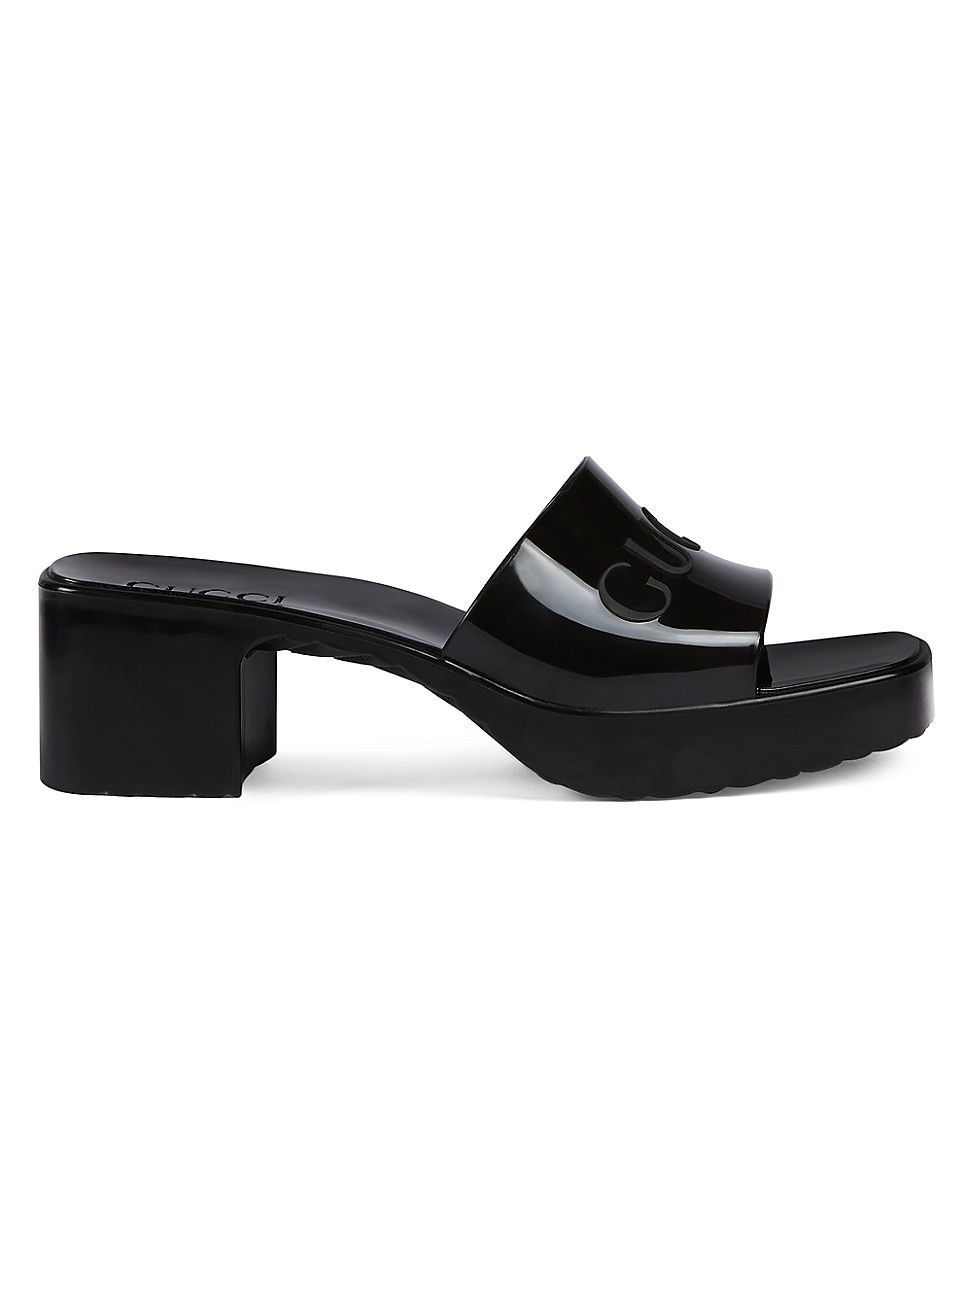 Gucci Women's Women's Rubber Slide Sandals - Nero - Size 10 | Saks Fifth Avenue